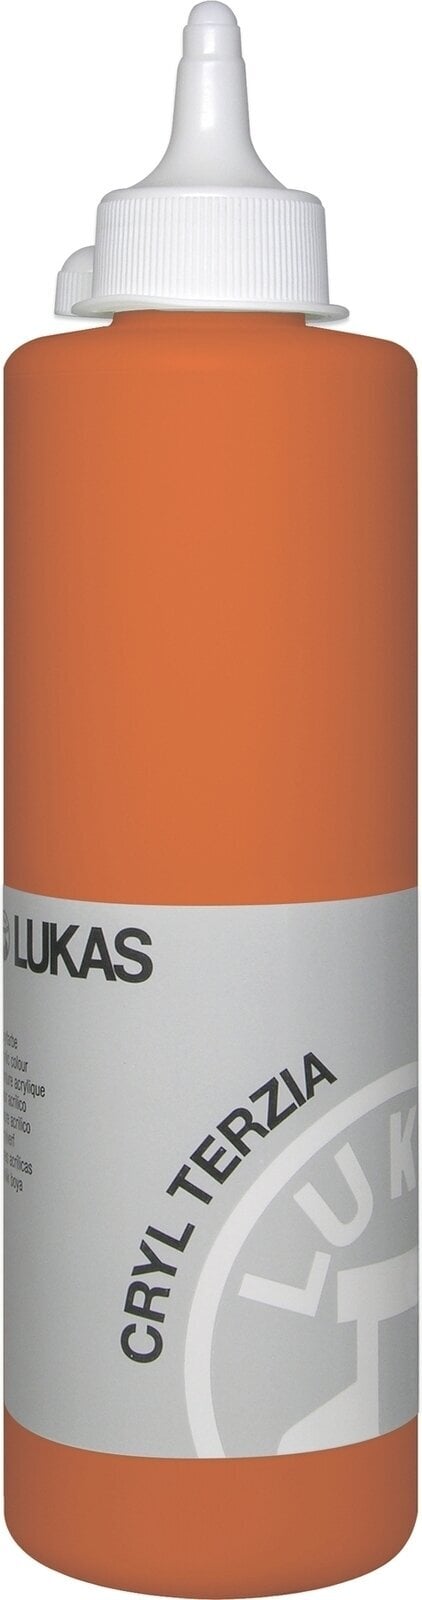 Acrylic Paint Lukas Cryl Terzia Acrylic Paint 500 ml Cadmium Orange Hue